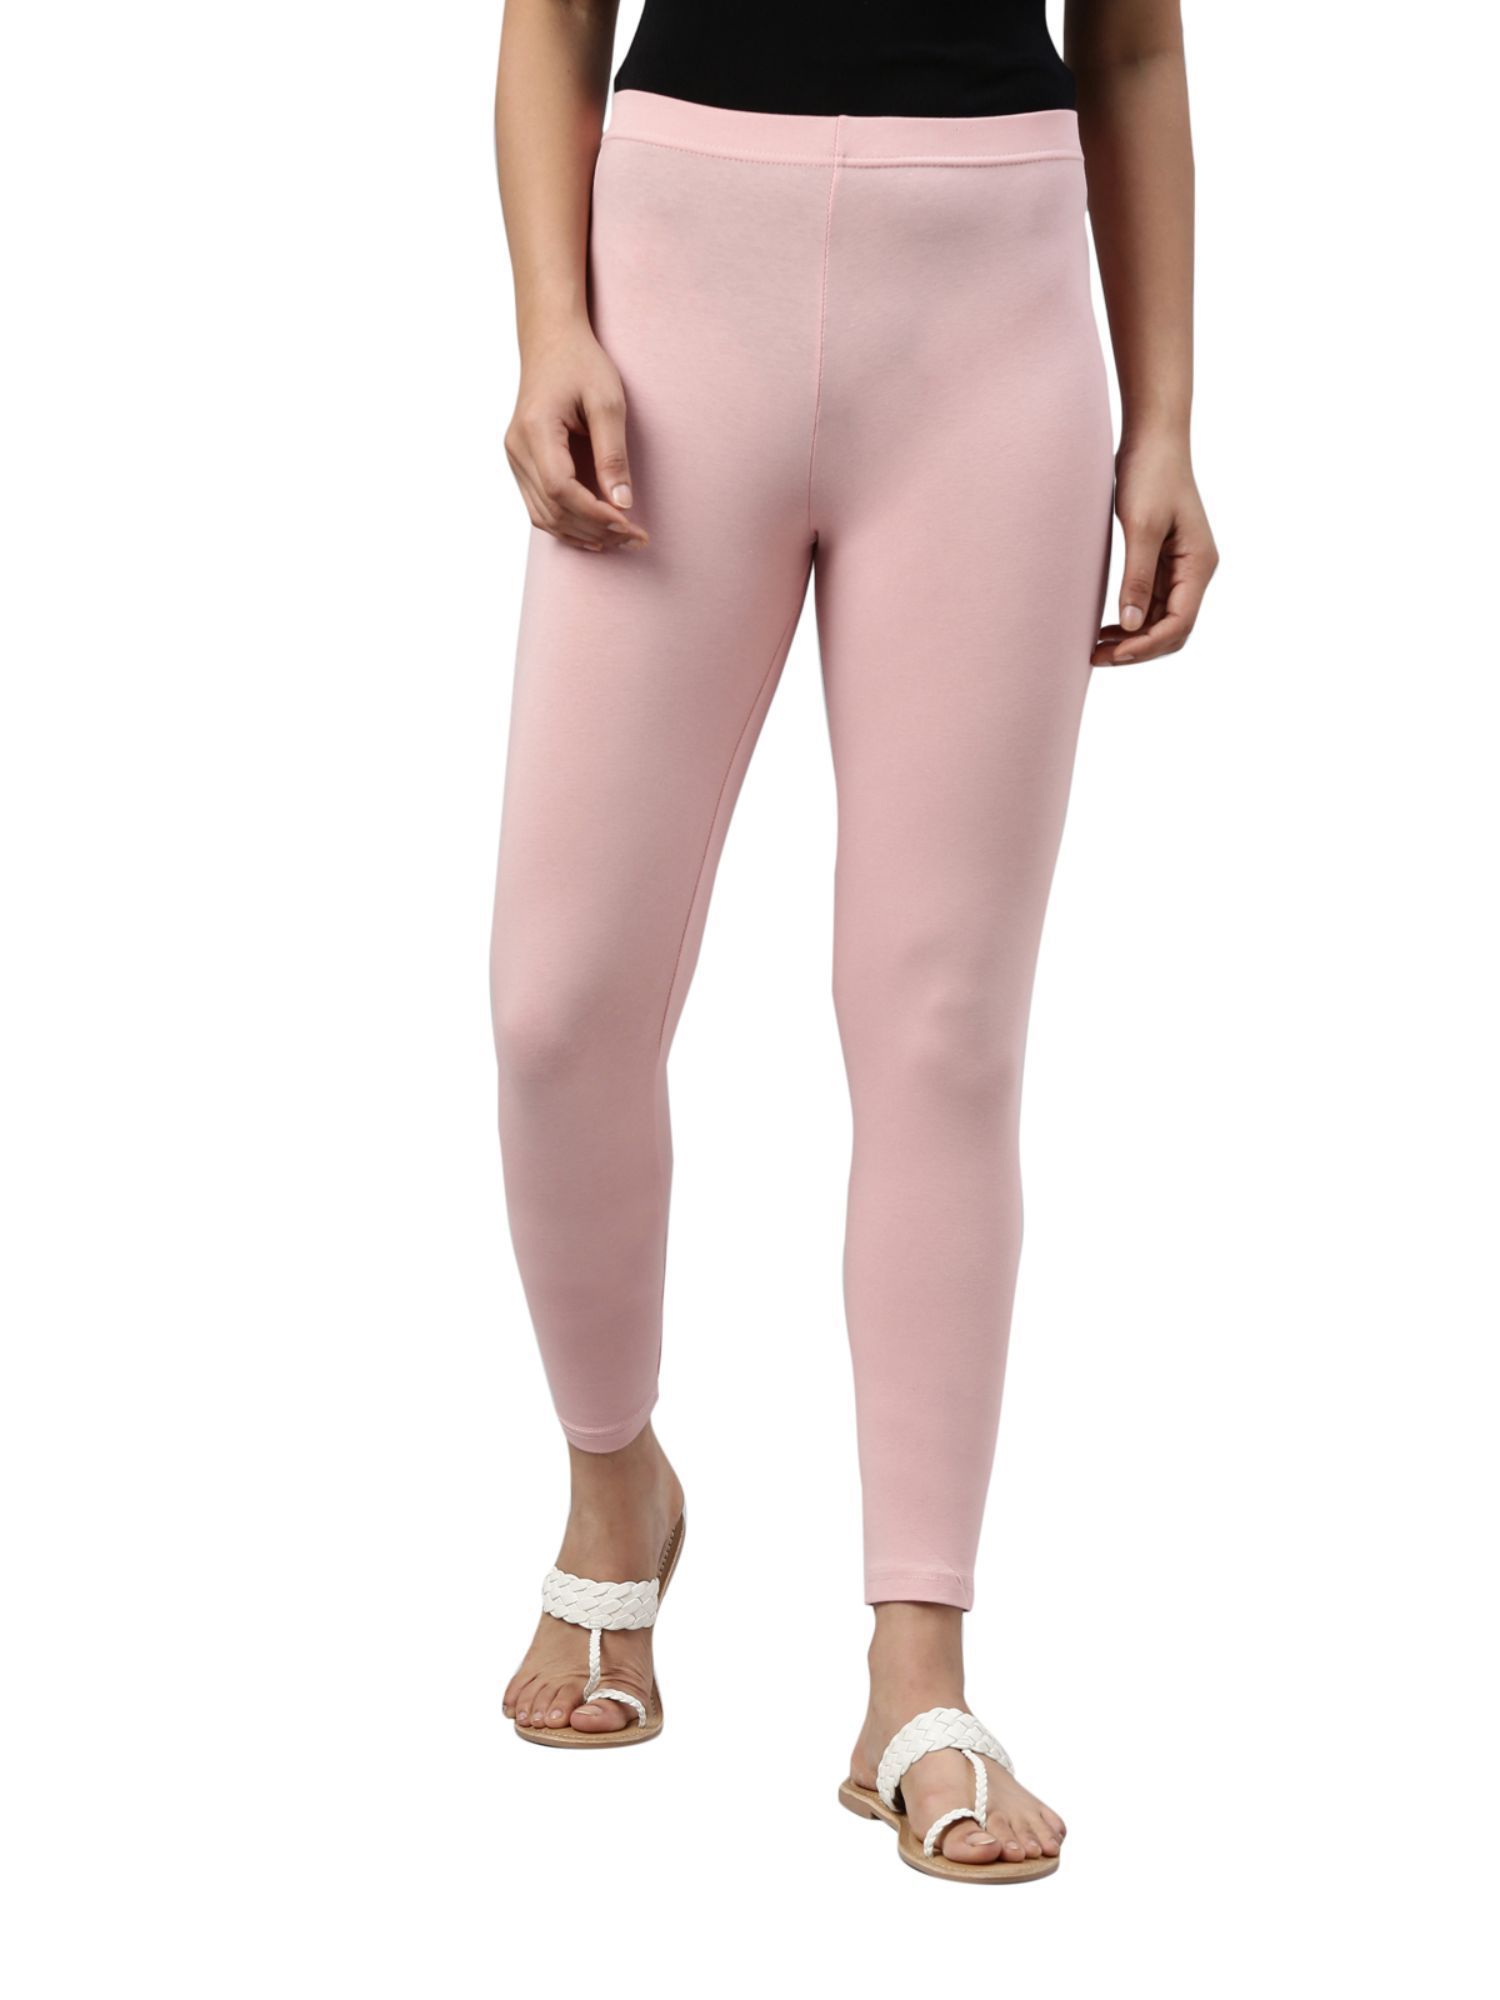 Victoria’s Secret Hot Pink Yoga Pants 💗, the cutest